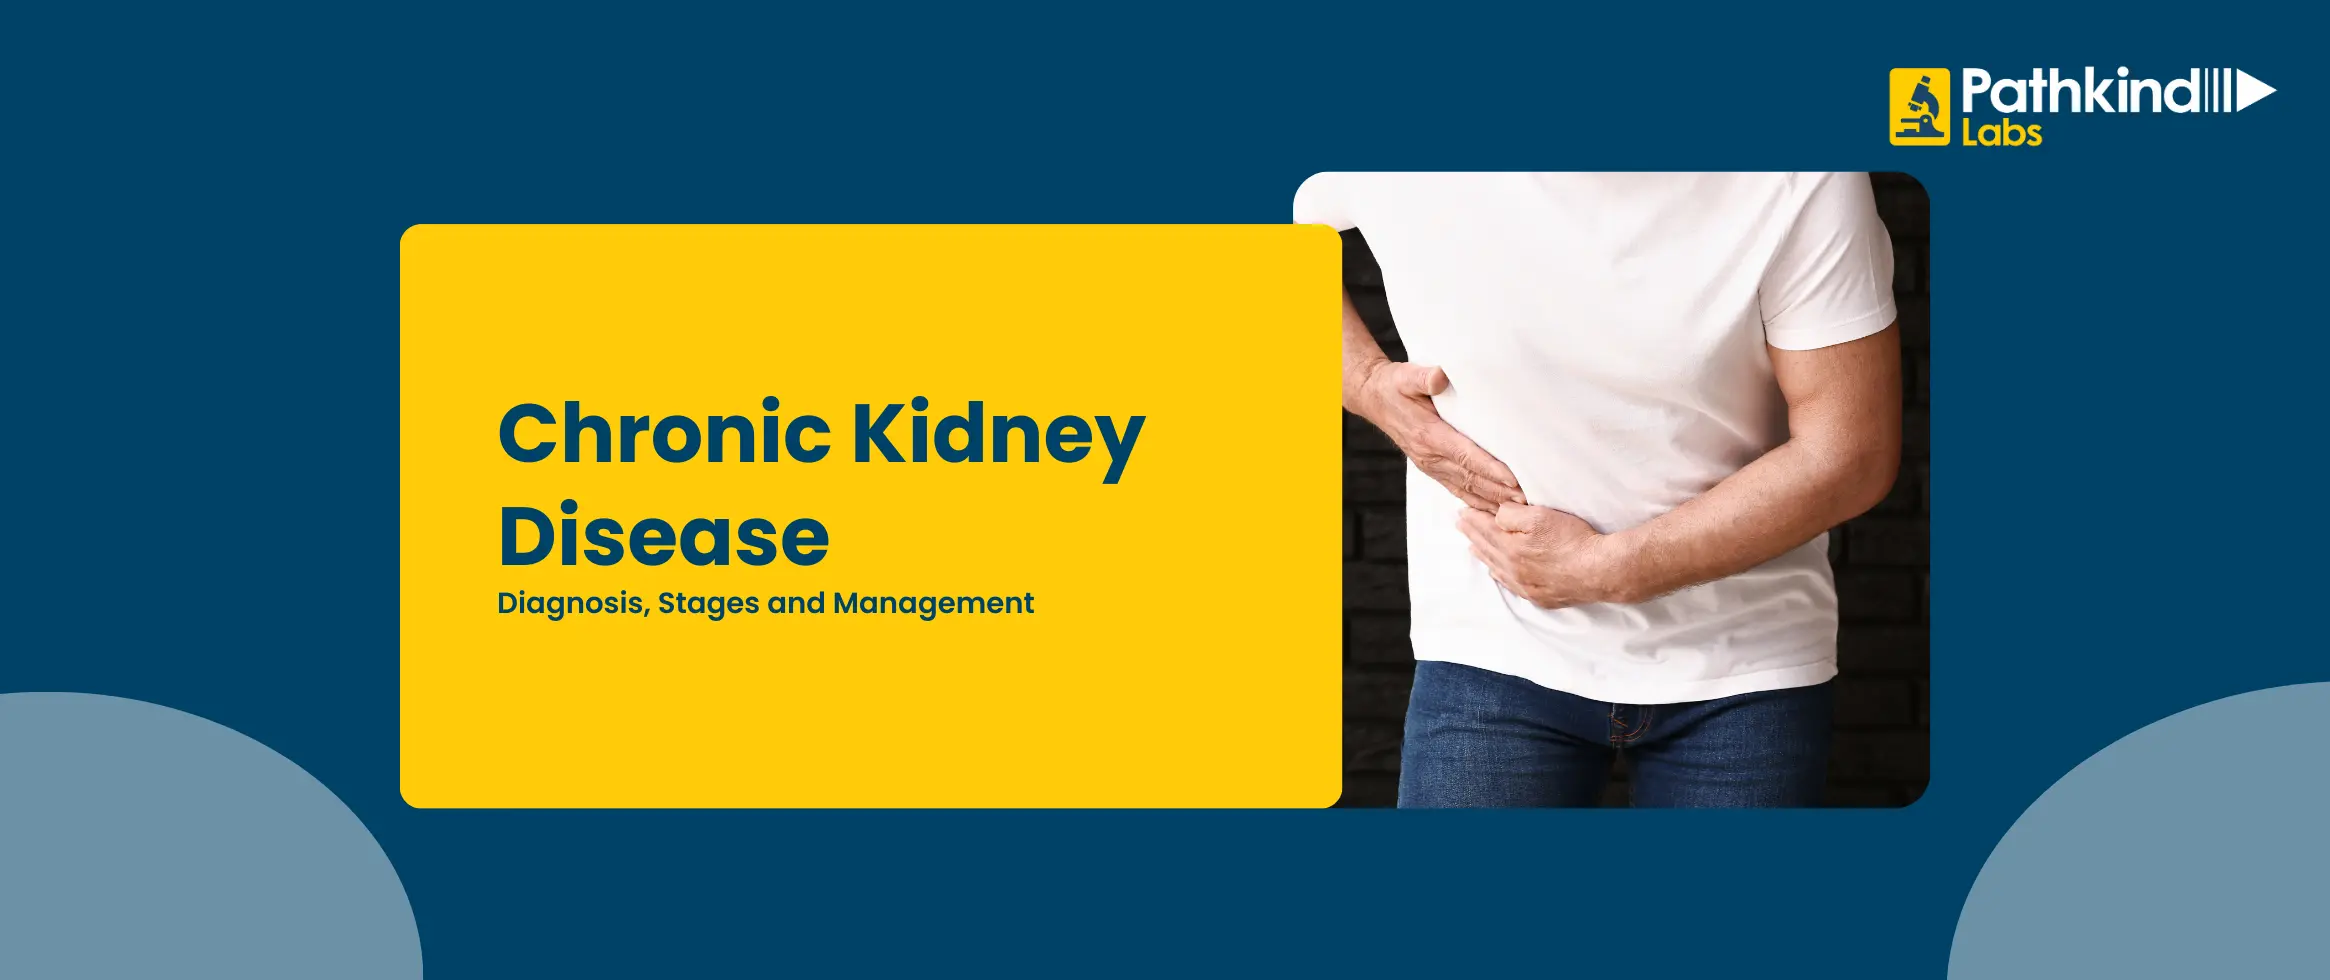 symptoms of chronic kidney disease